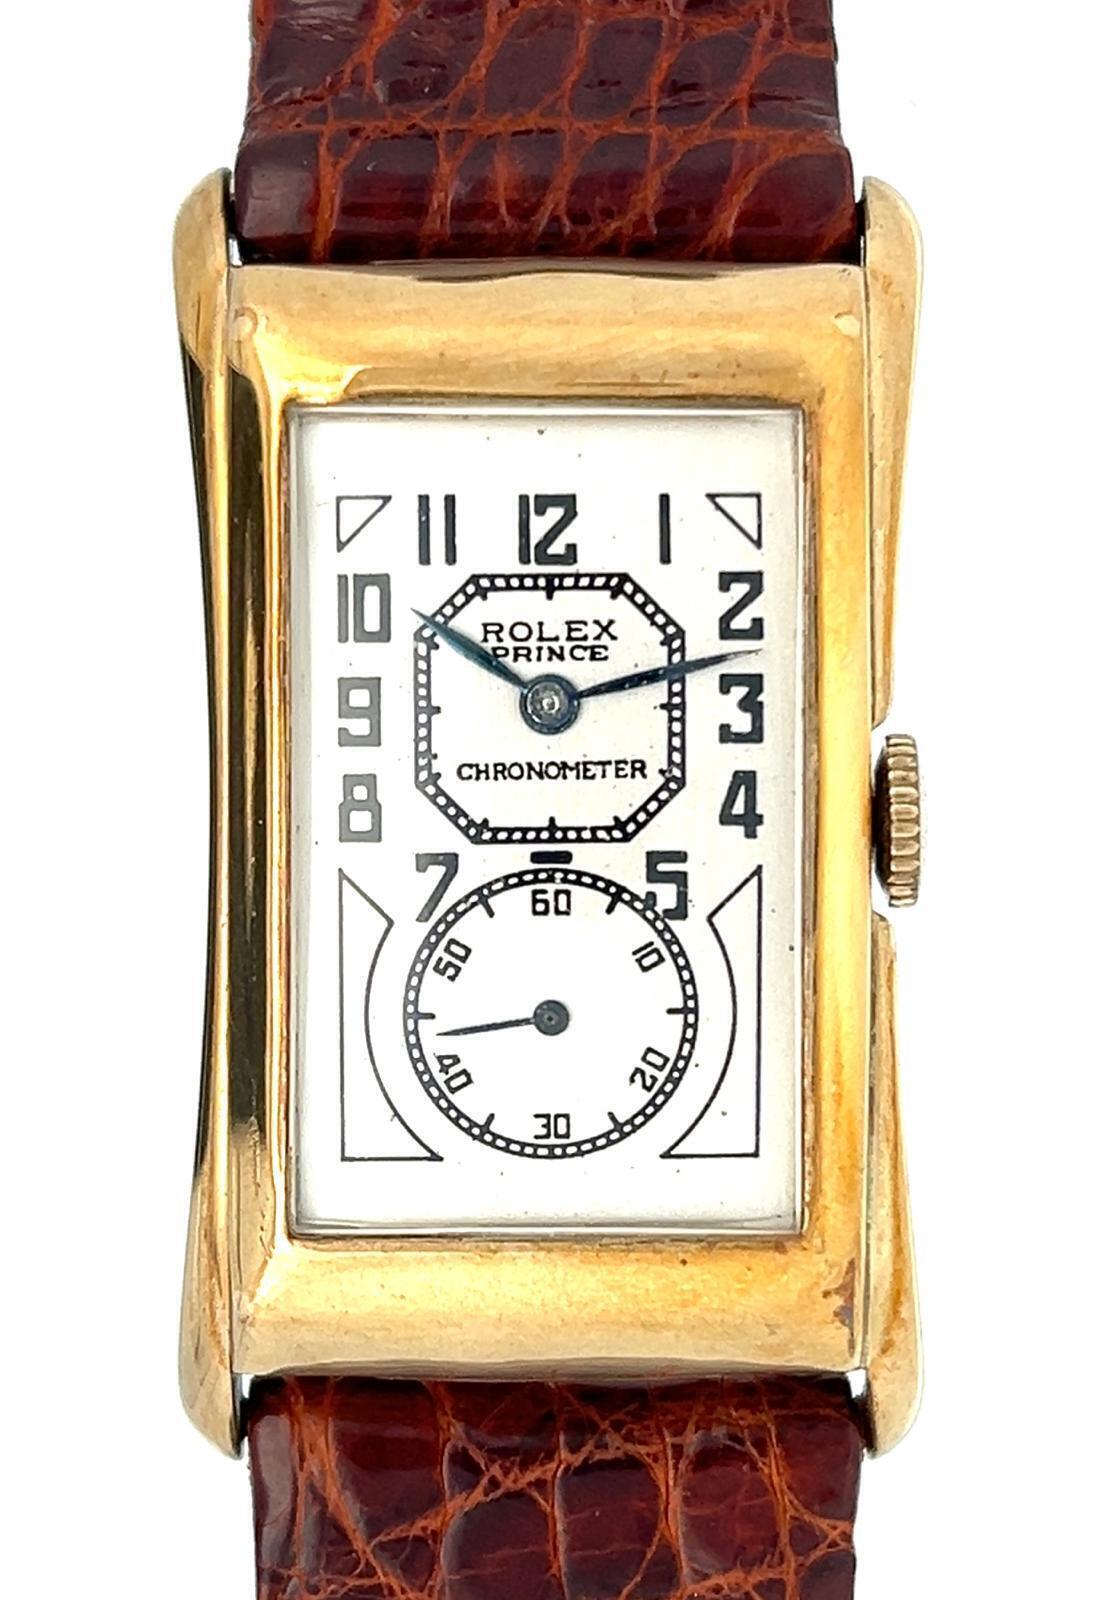 ROLEX PRINCE BRANCARD REF 1490 DOCTOR’S WATCH9K GOLD WRISTWATCH, CIRCA 1930’S